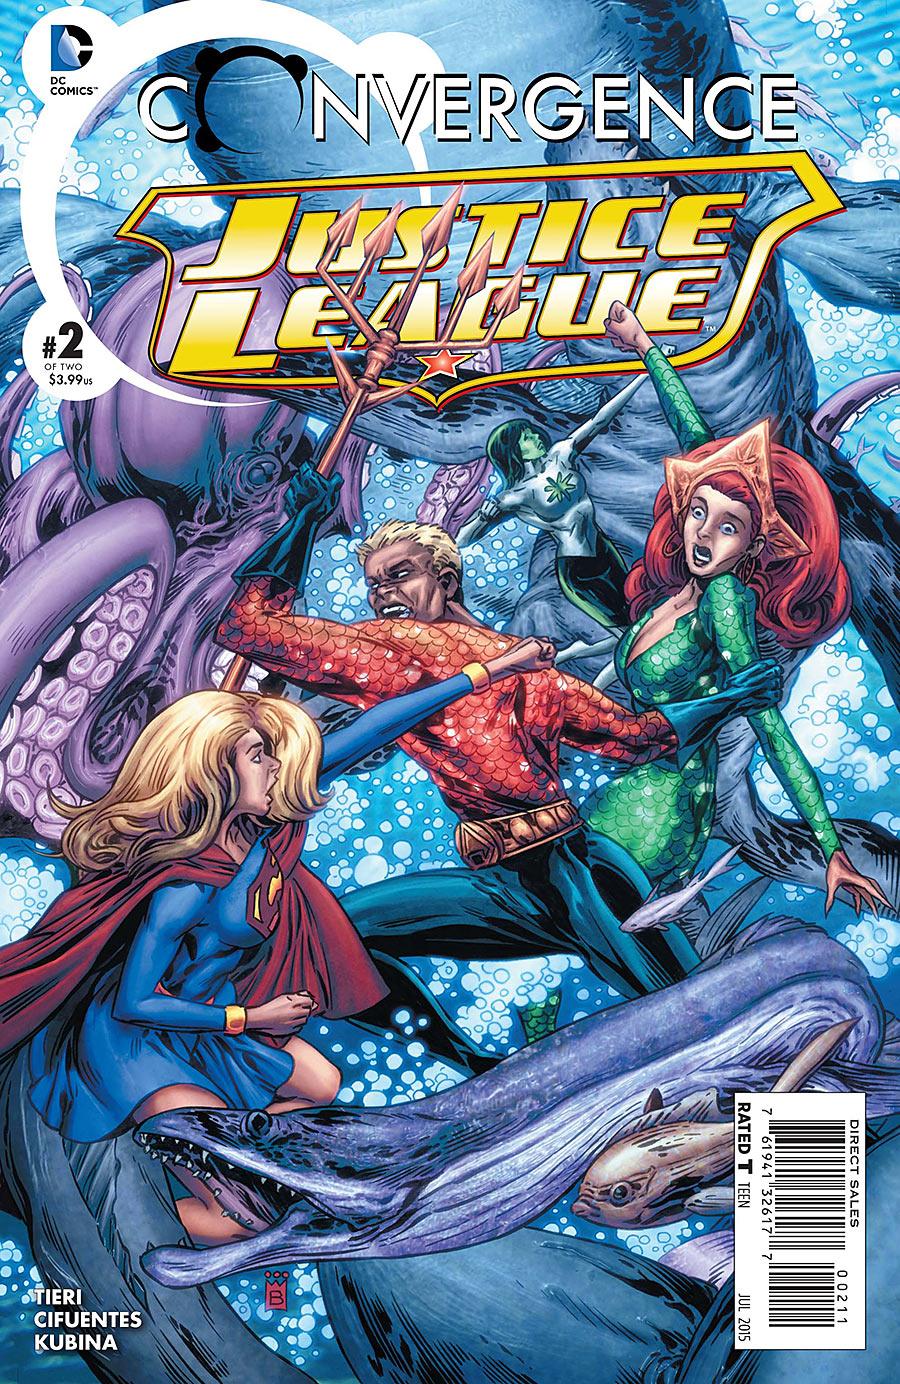 Convergence: Justice League Vol. 1 #2